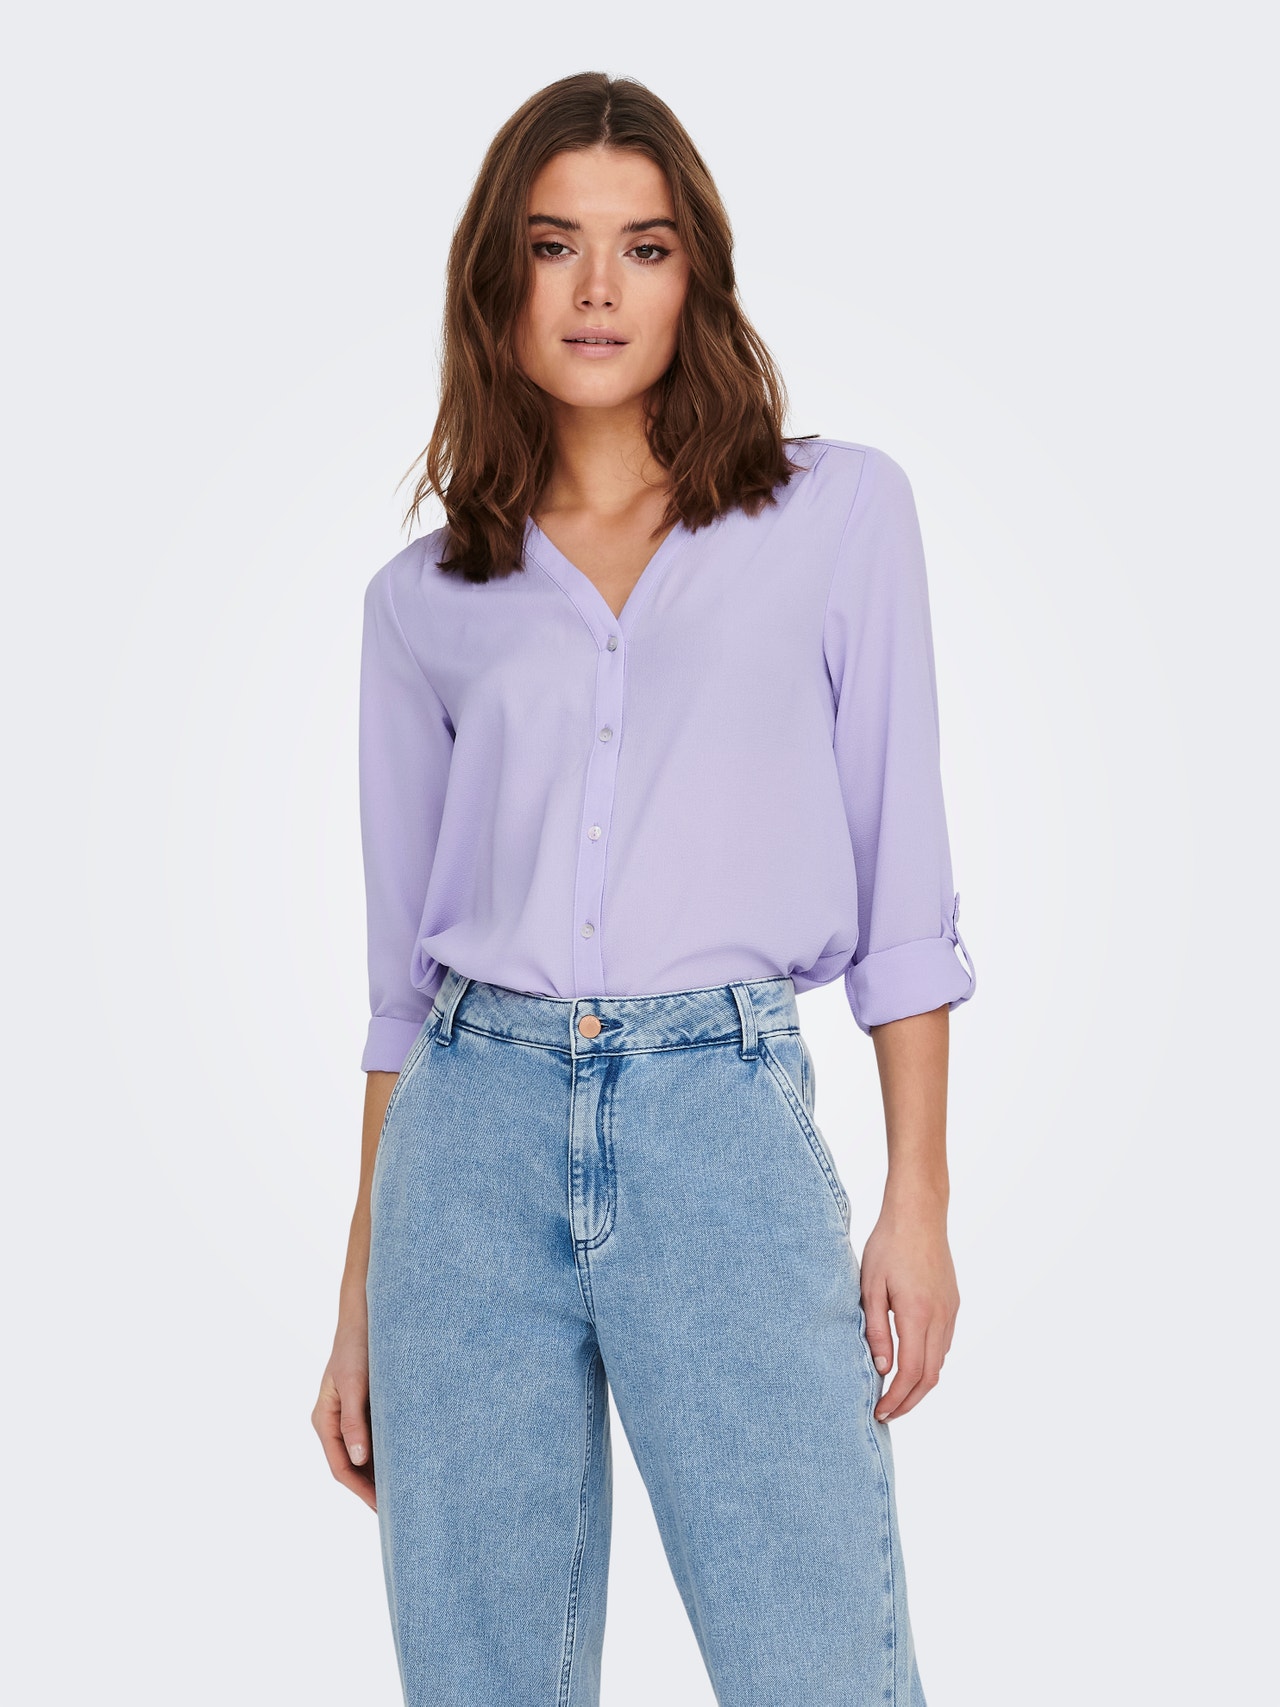 ONLY Regular Fit Button under collar Shirt -Lavender - 15165571